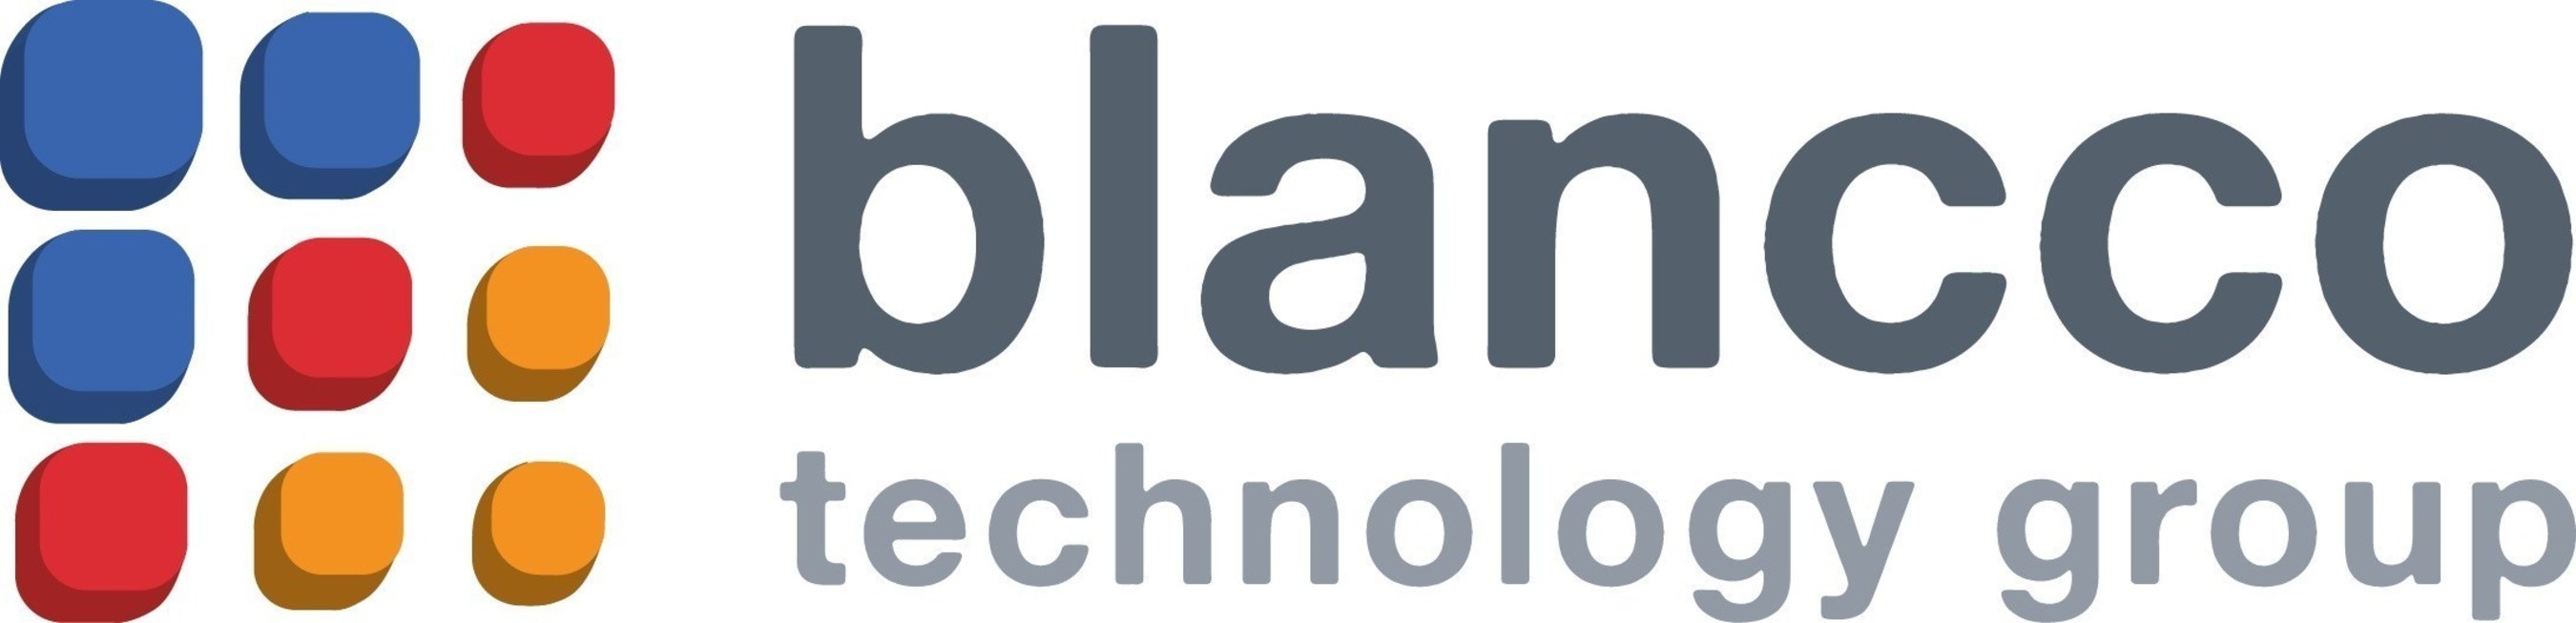 Blancco Technology Group Logo (PRNewsFoto/Blancco Technology Group) (PRNewsFoto/Blancco Technology Group)